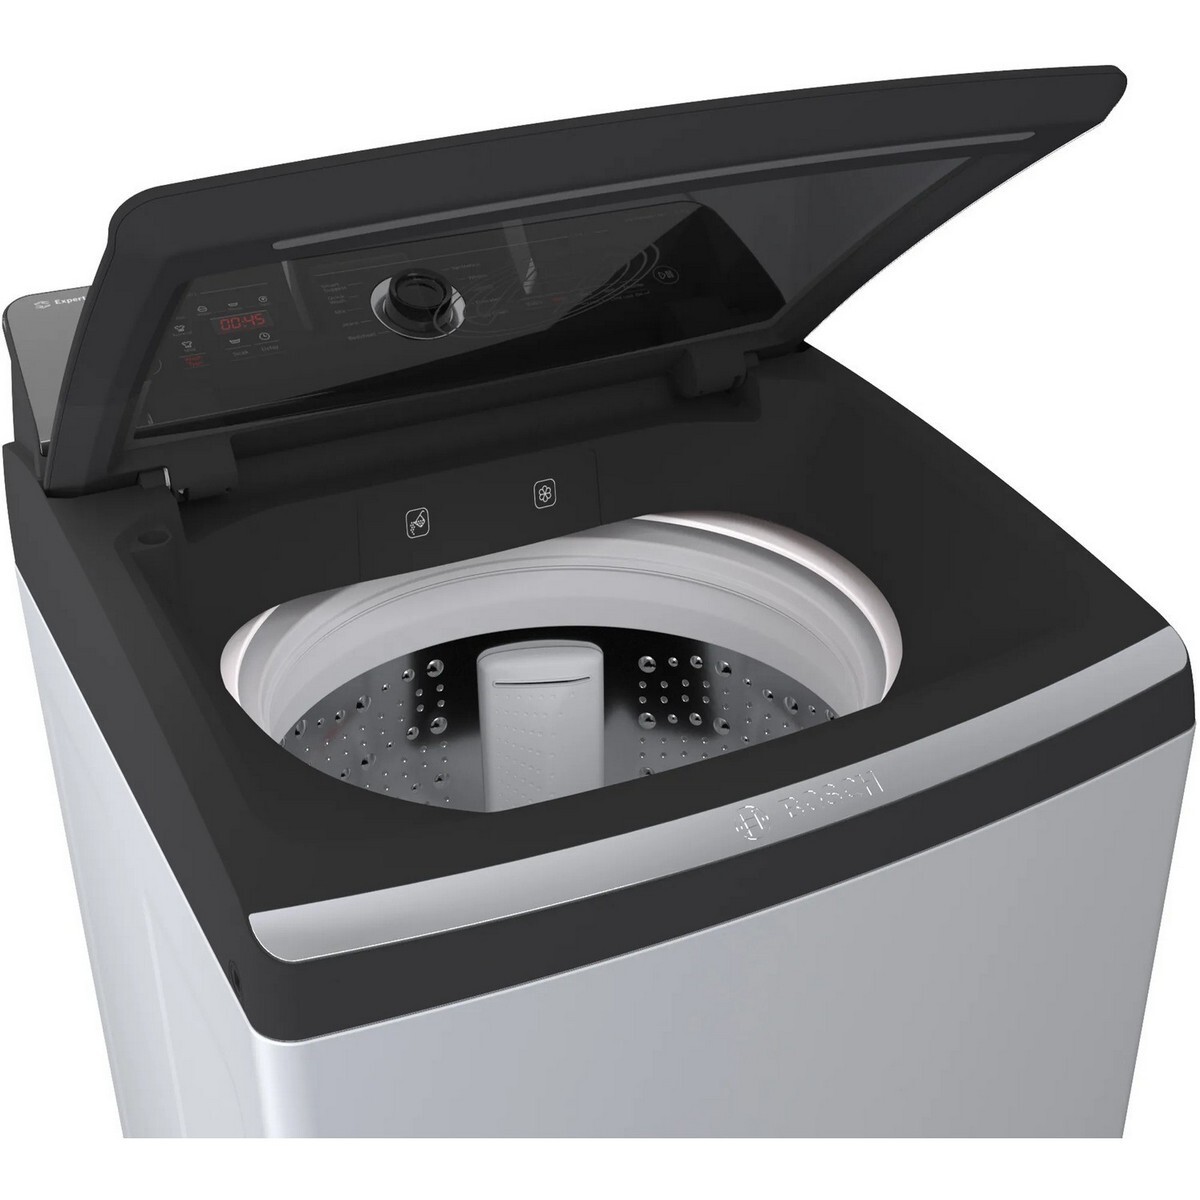 Bosch Top Load Washing Machine WOI753S0IN 7.5kg